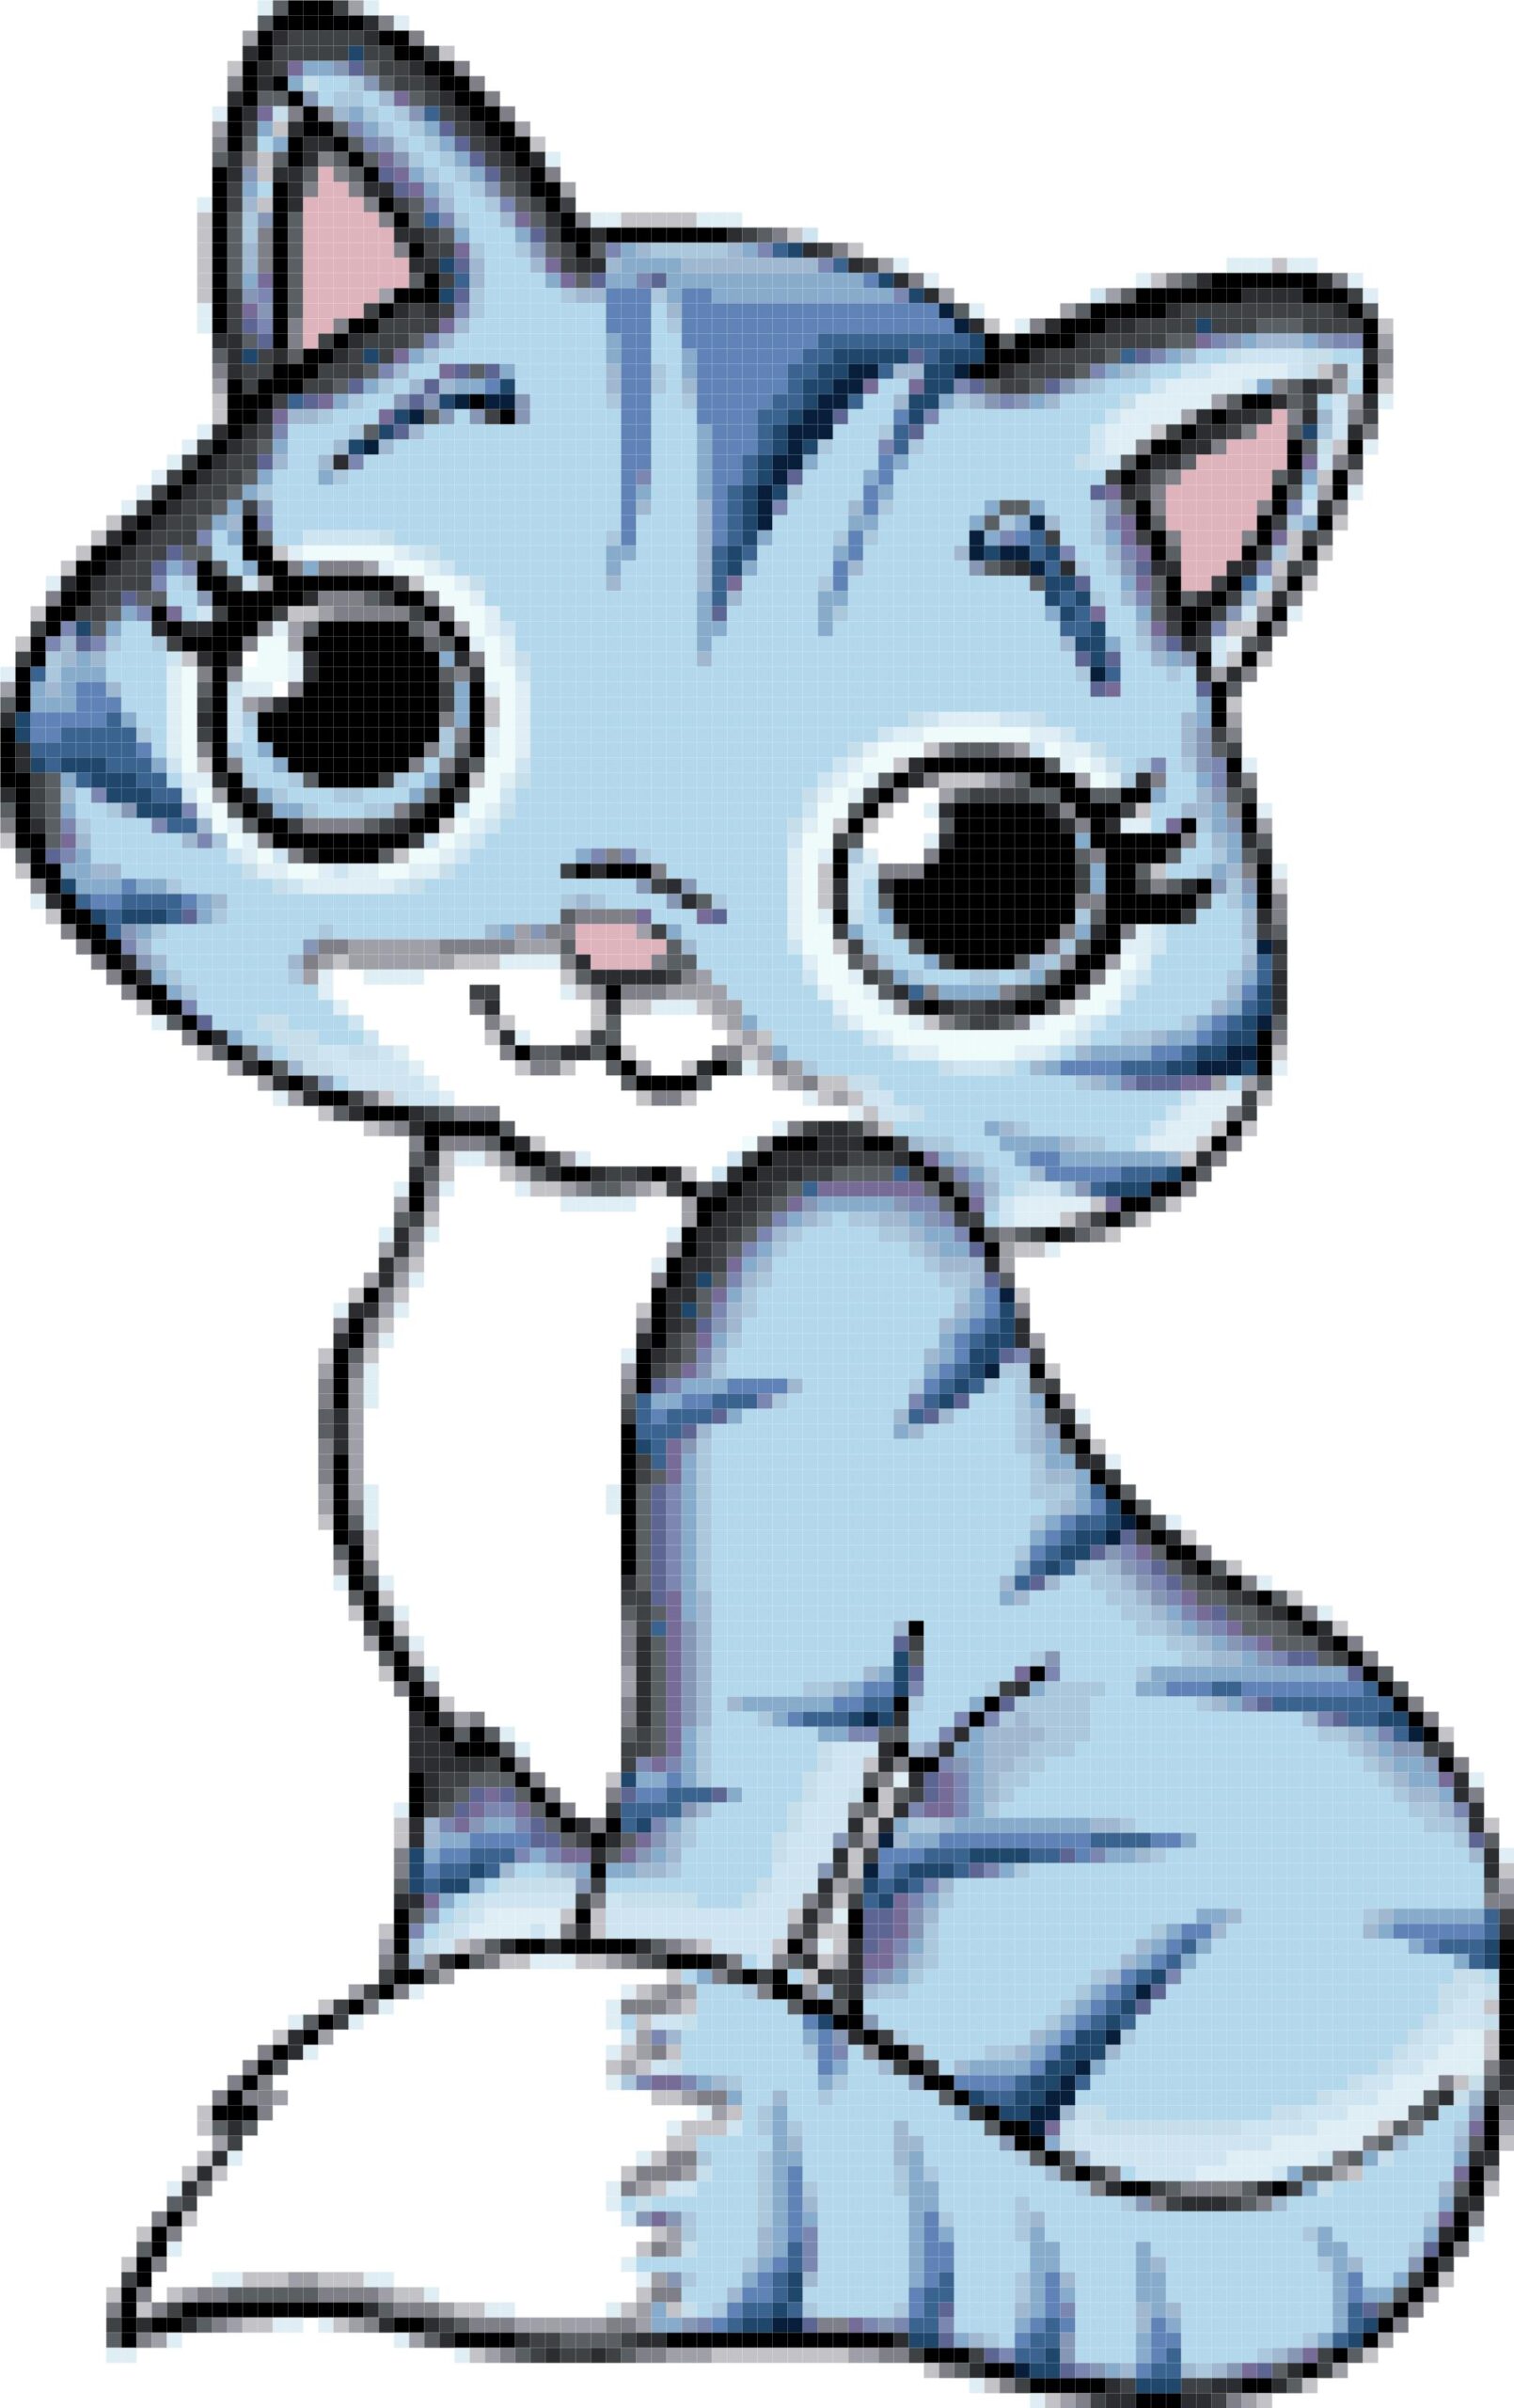 Blue cat image